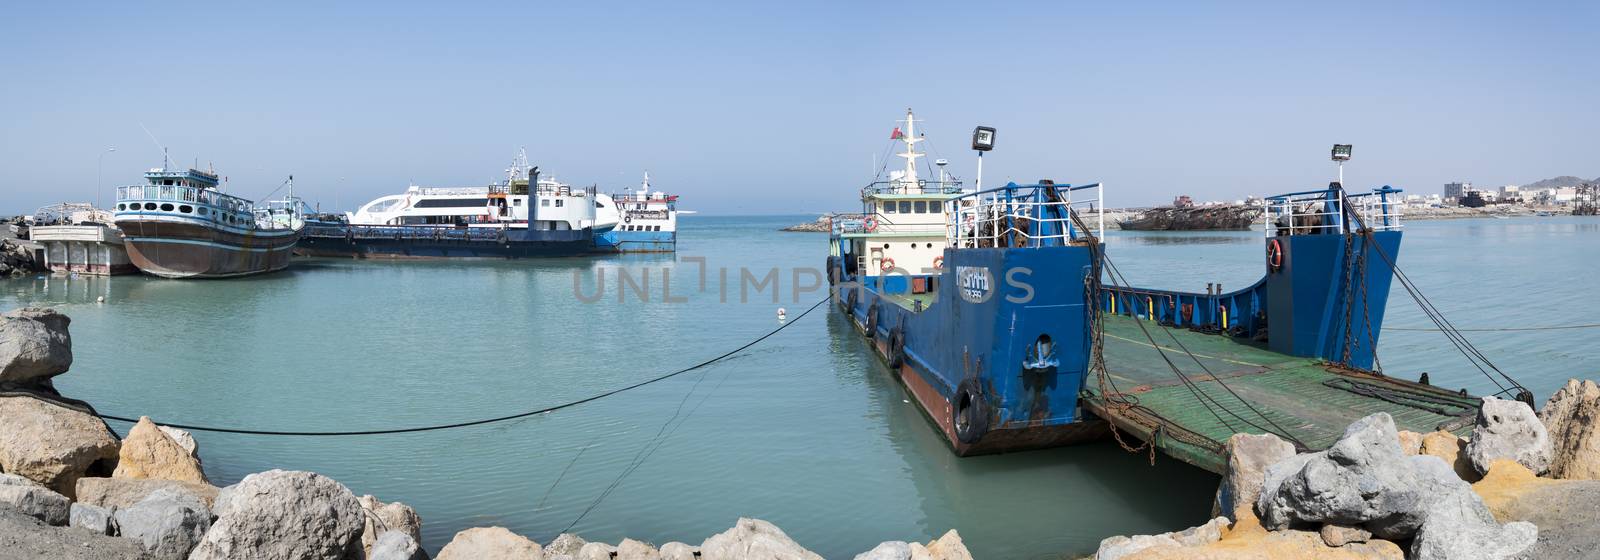 Ferries at Masirah Island harbor, Oman by GABIS